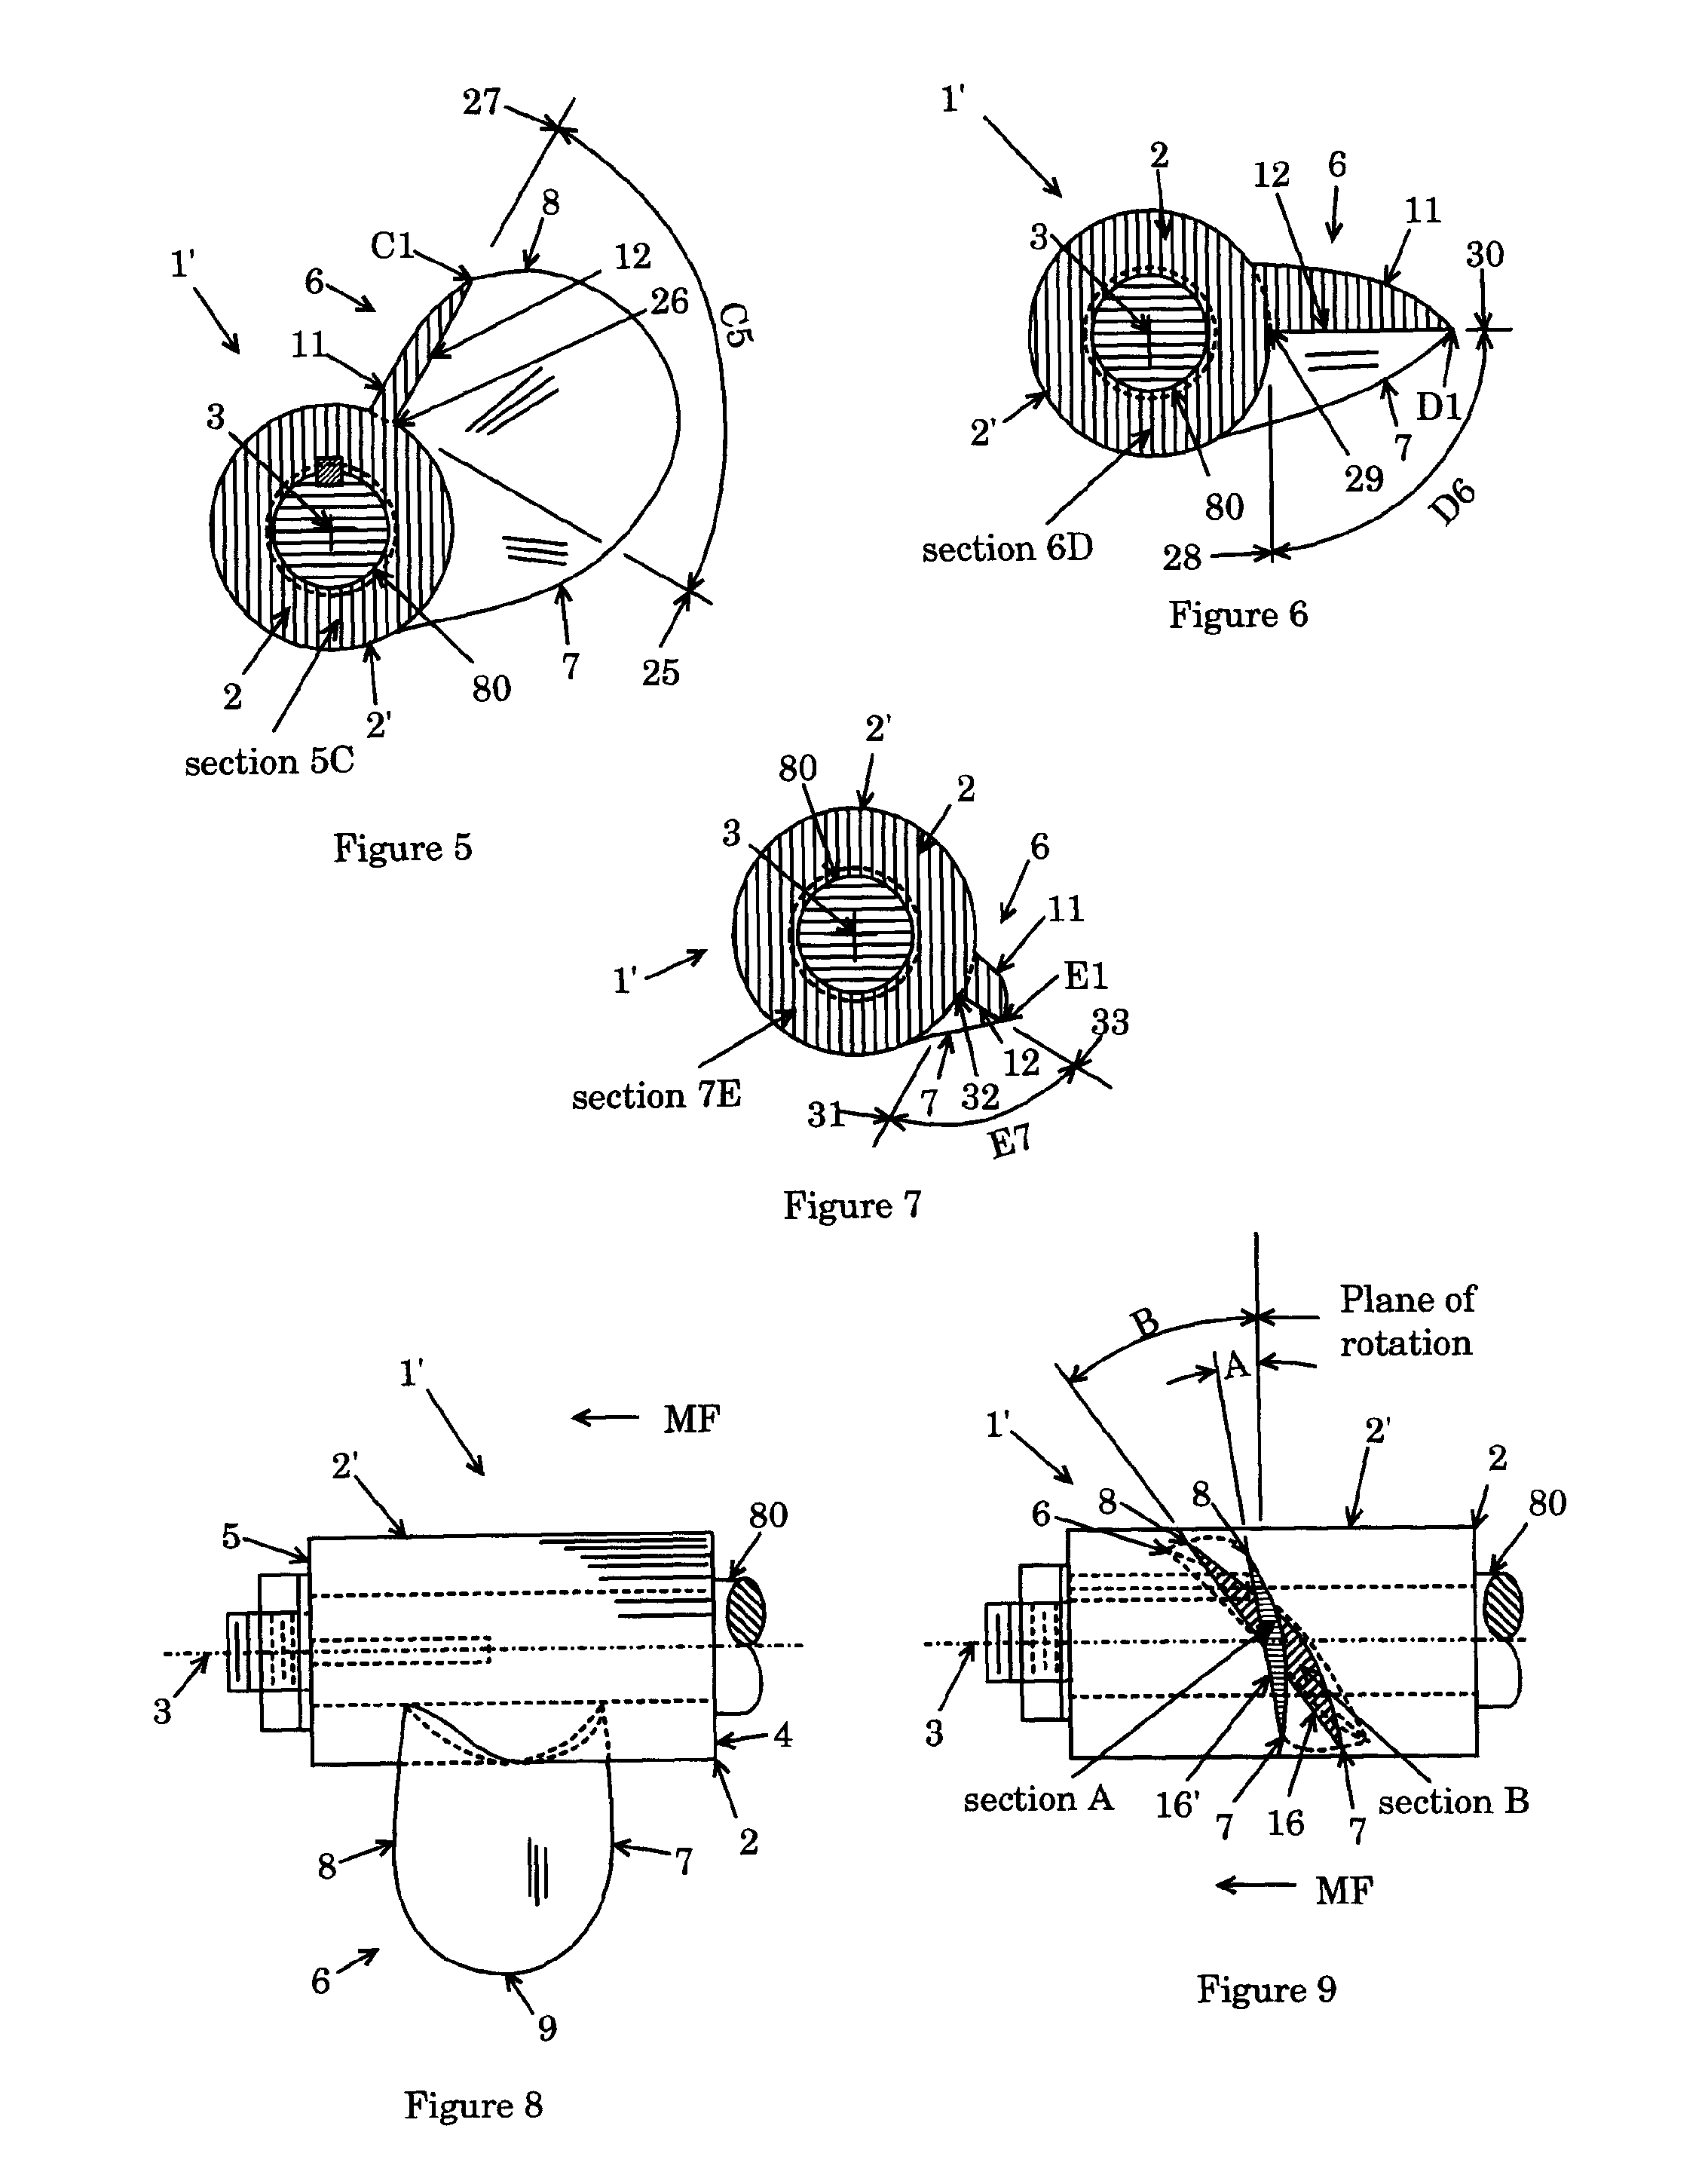 Blade Orientation of an Impeller or Propeller